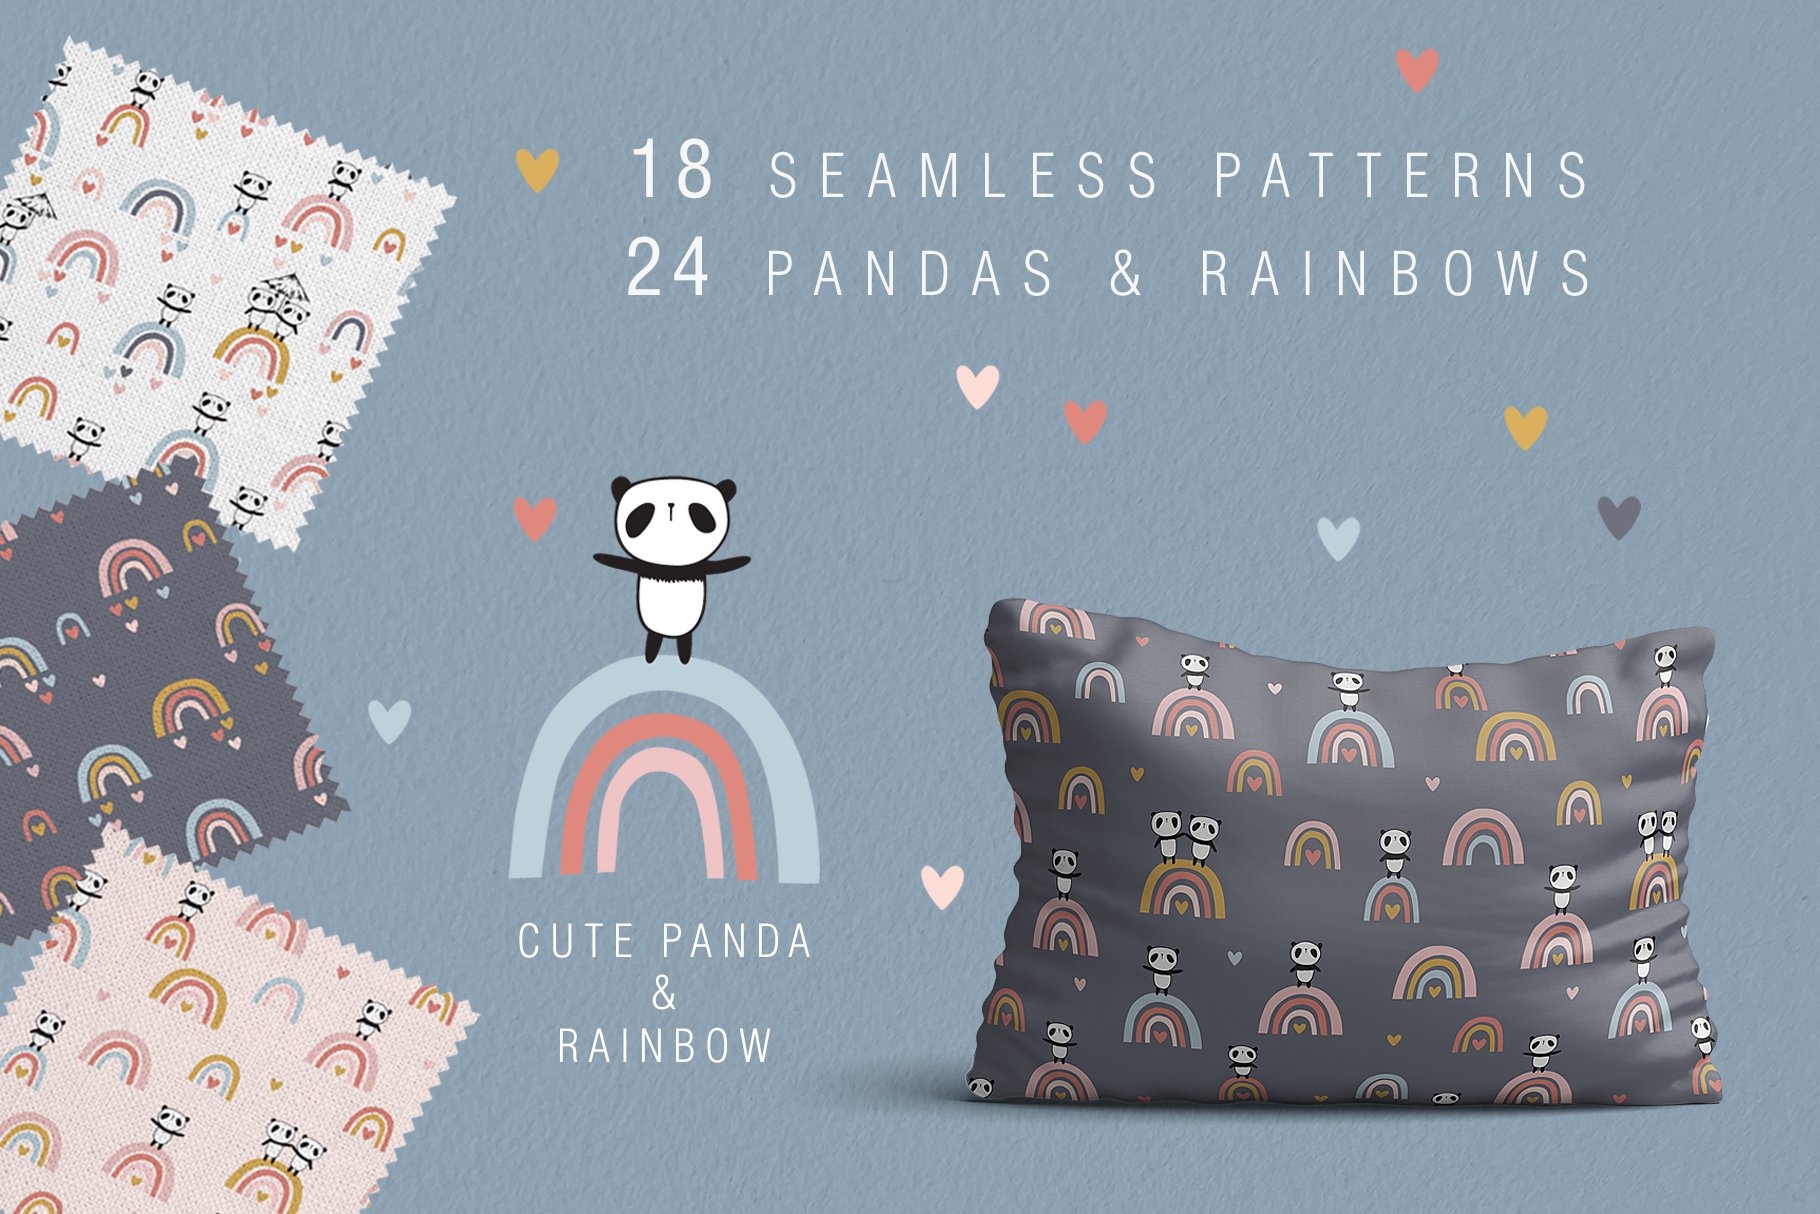 Cute pandas & rainbows  patterns cover image.